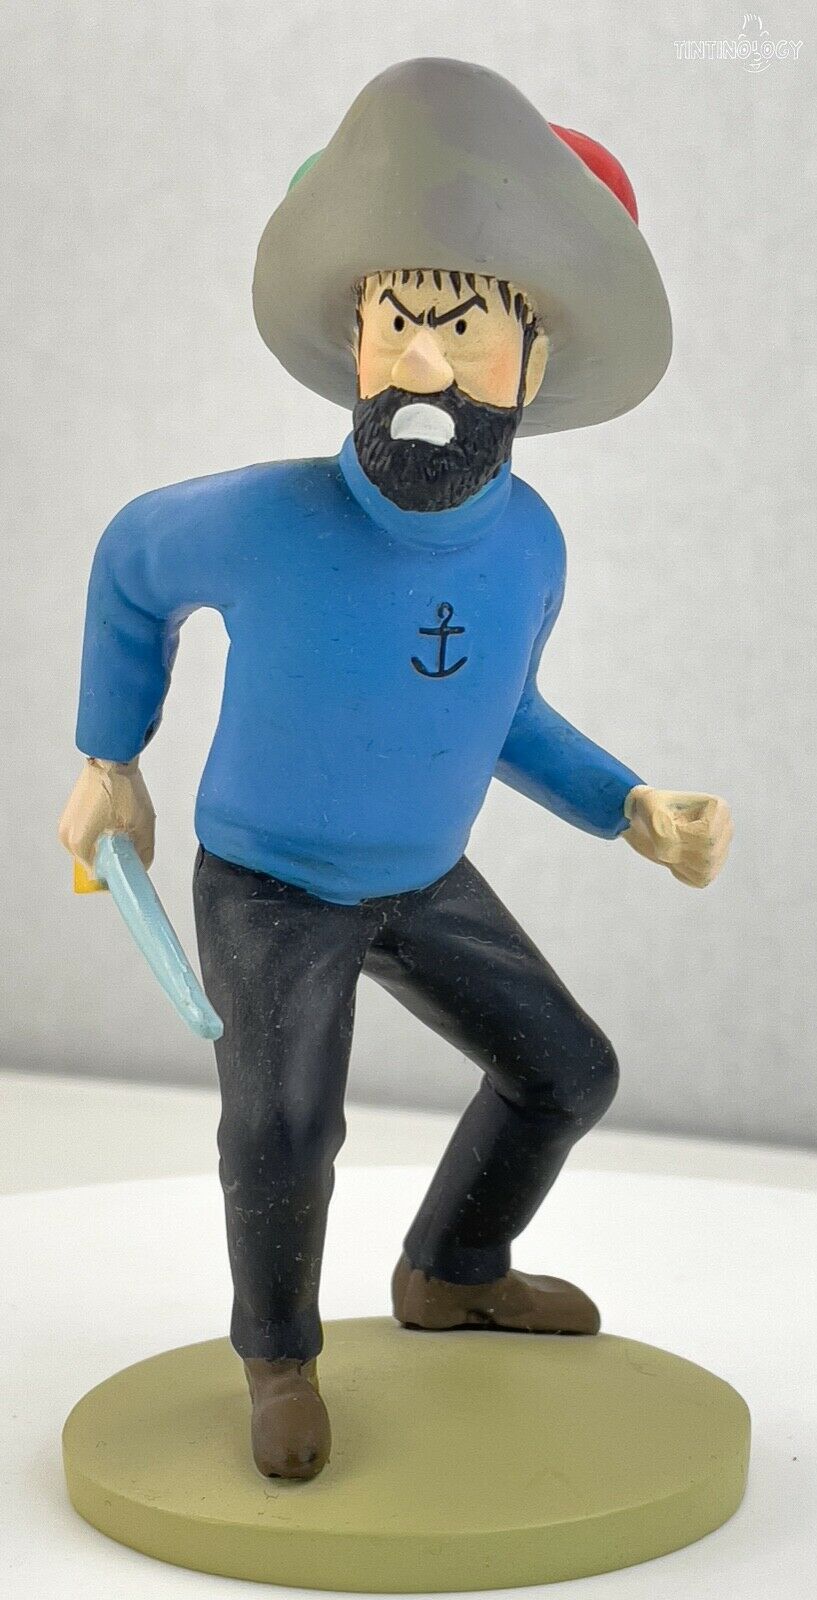 Tintin Figurines Officielle # 24 Haddock & Sword - Unicorn Herge model ML Figure